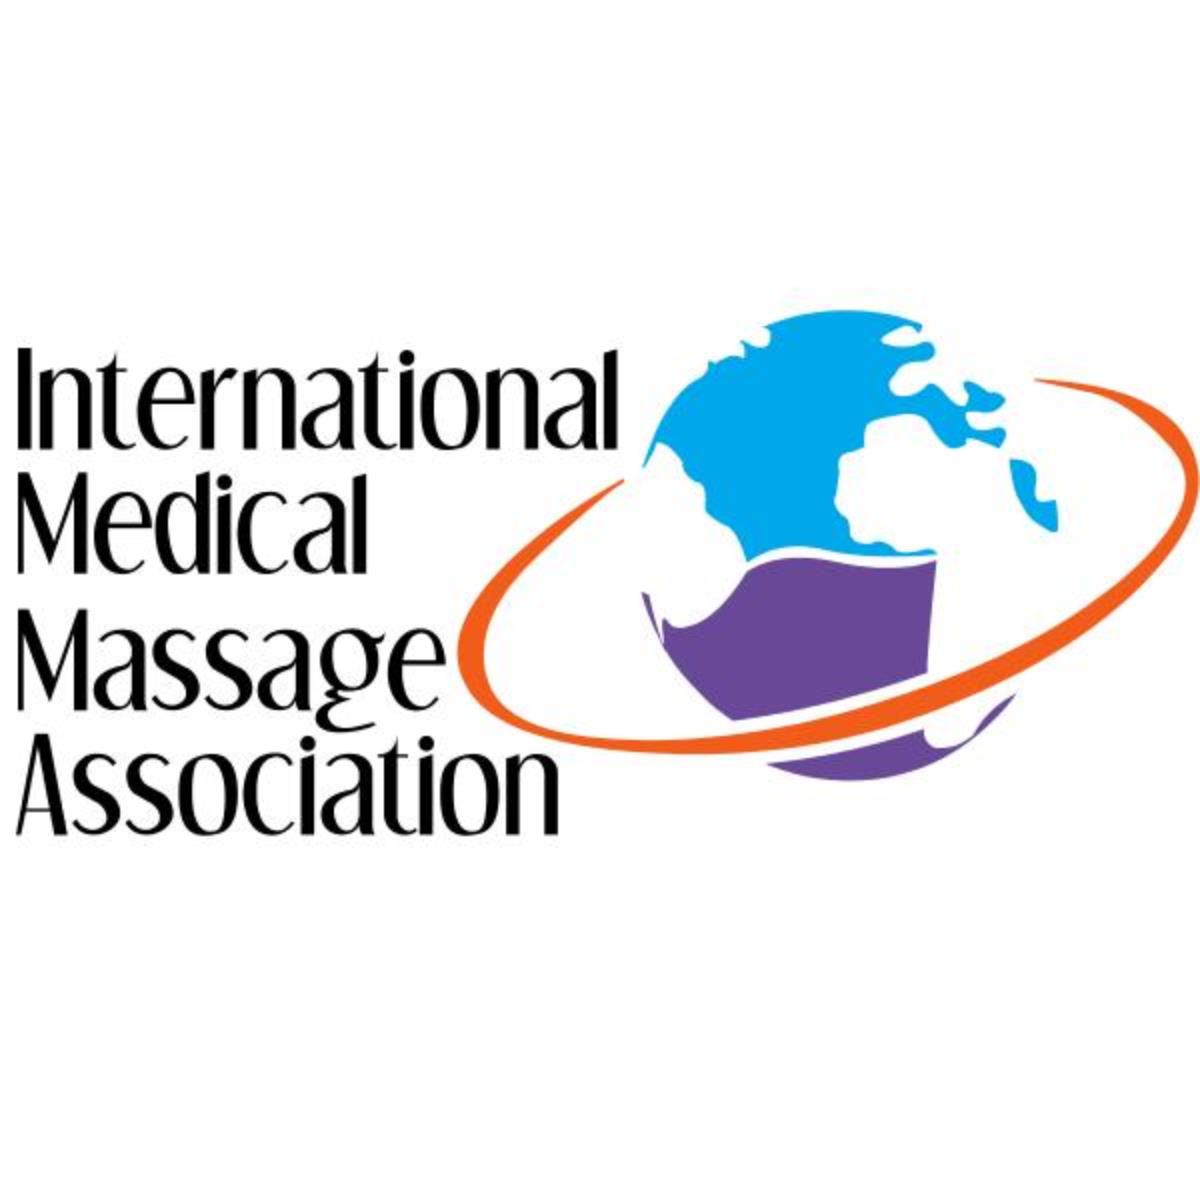 International Medical Massage Association